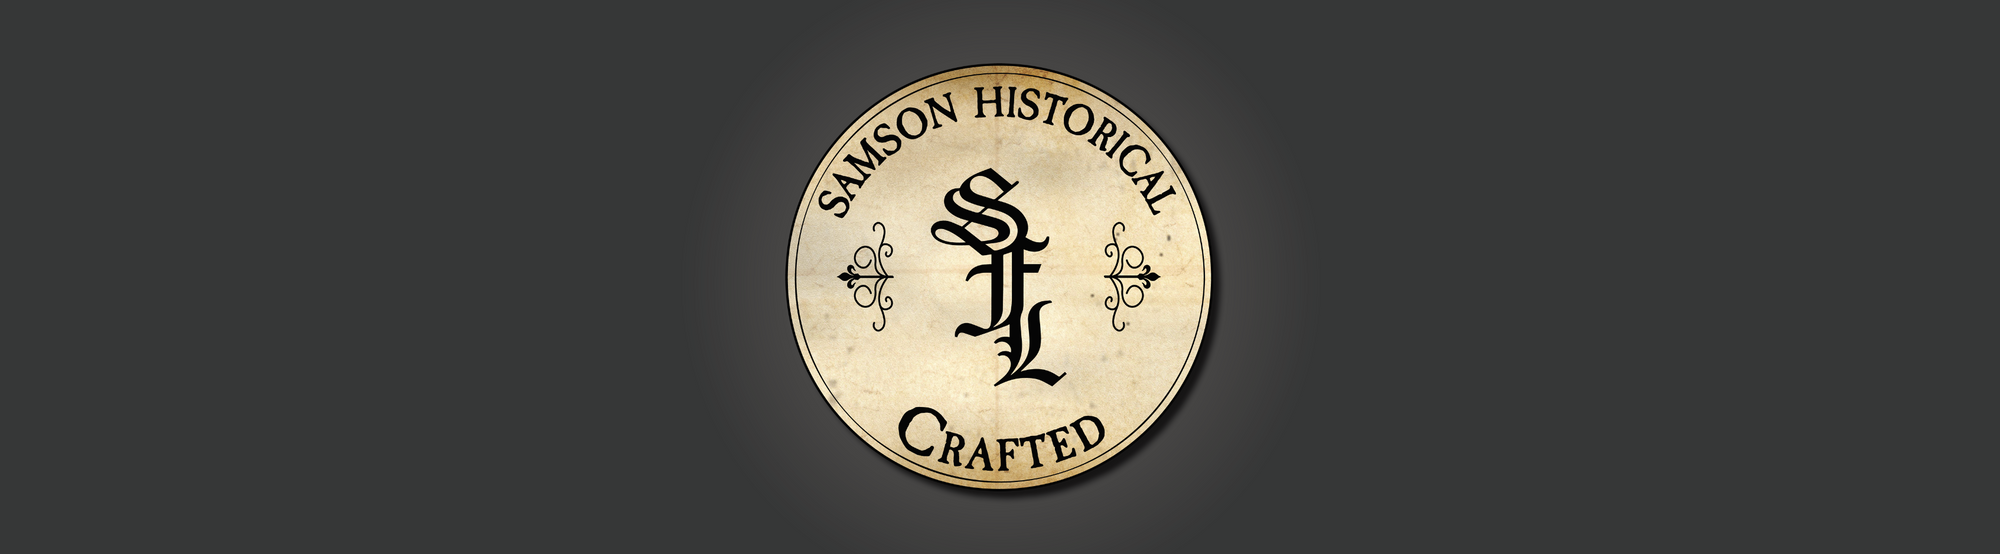 Bone Bodkin - Samson Historical